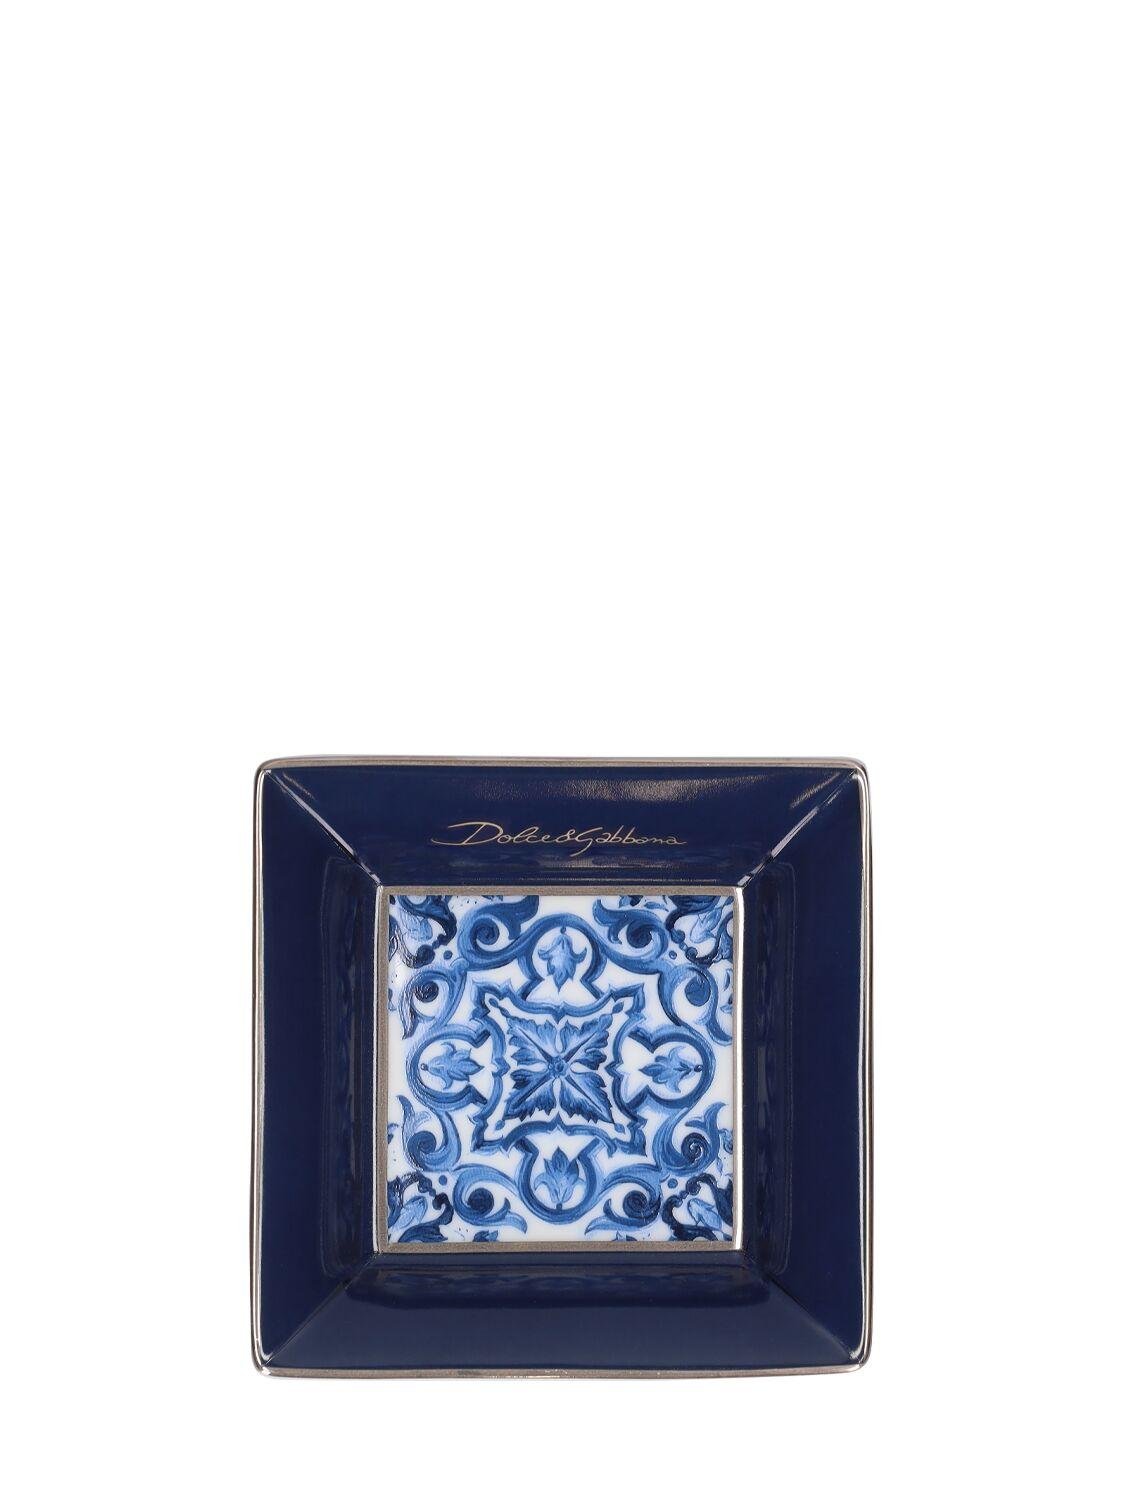 Blu Mediterraneo Square Decorative Plate by DOLCE&GABBANA